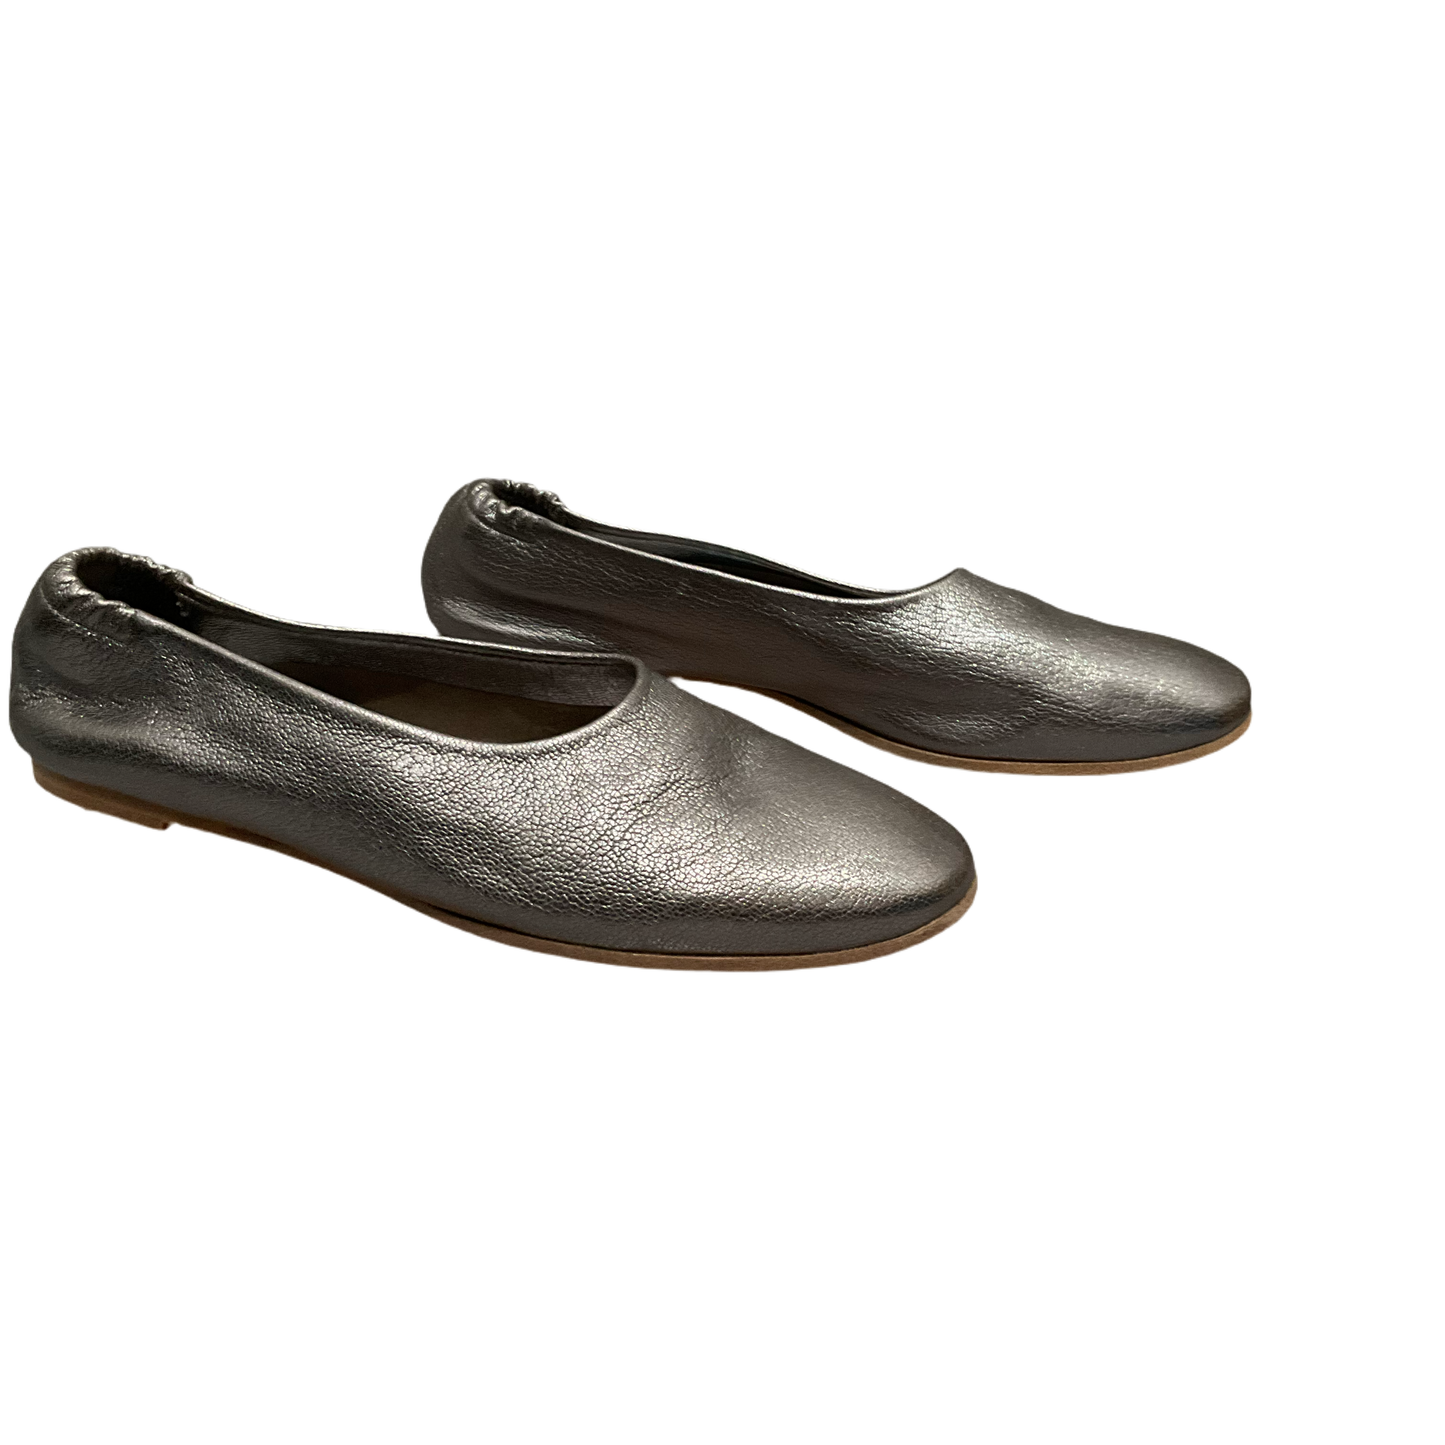 Silver Shoes Flats Cma, Size 6.5